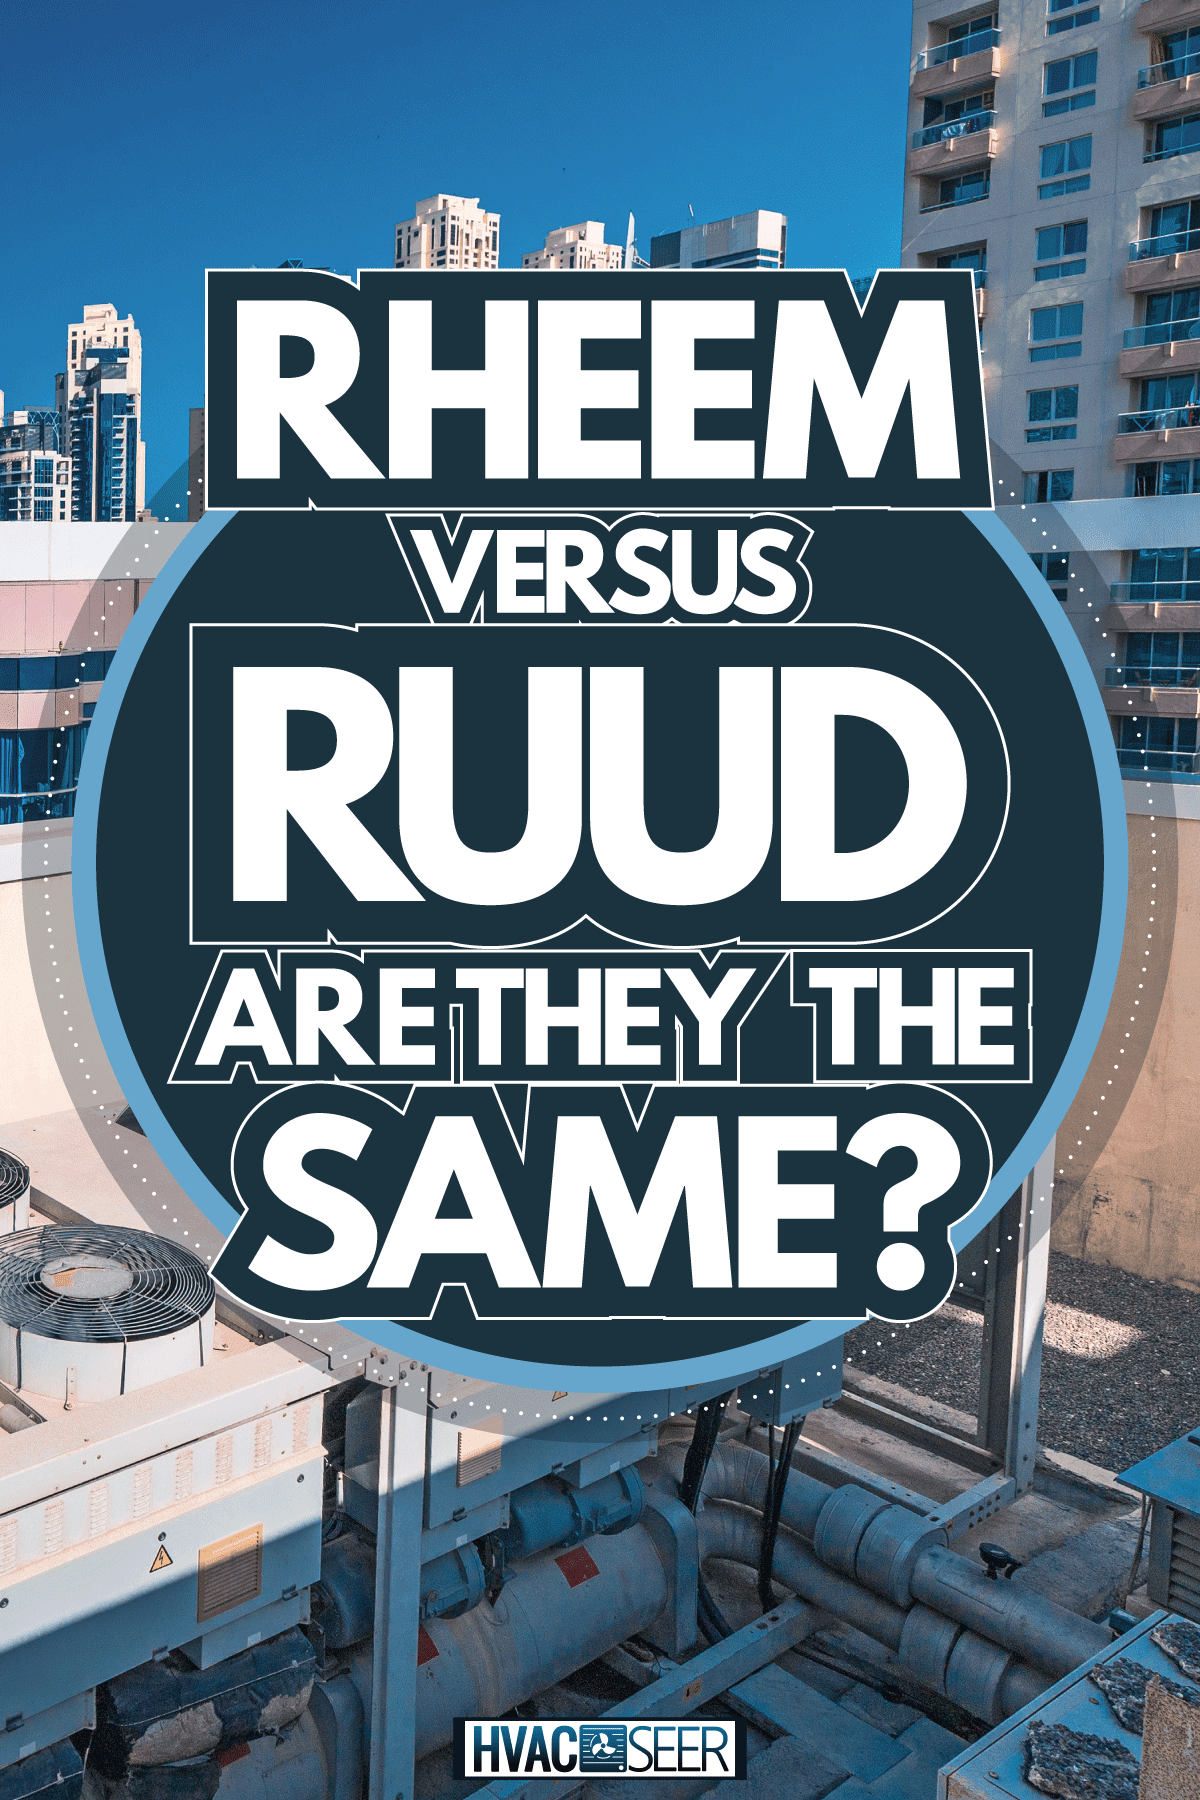 Difference between two company rheem and ruud, RheemVs.RuudAreTheyTheSame?